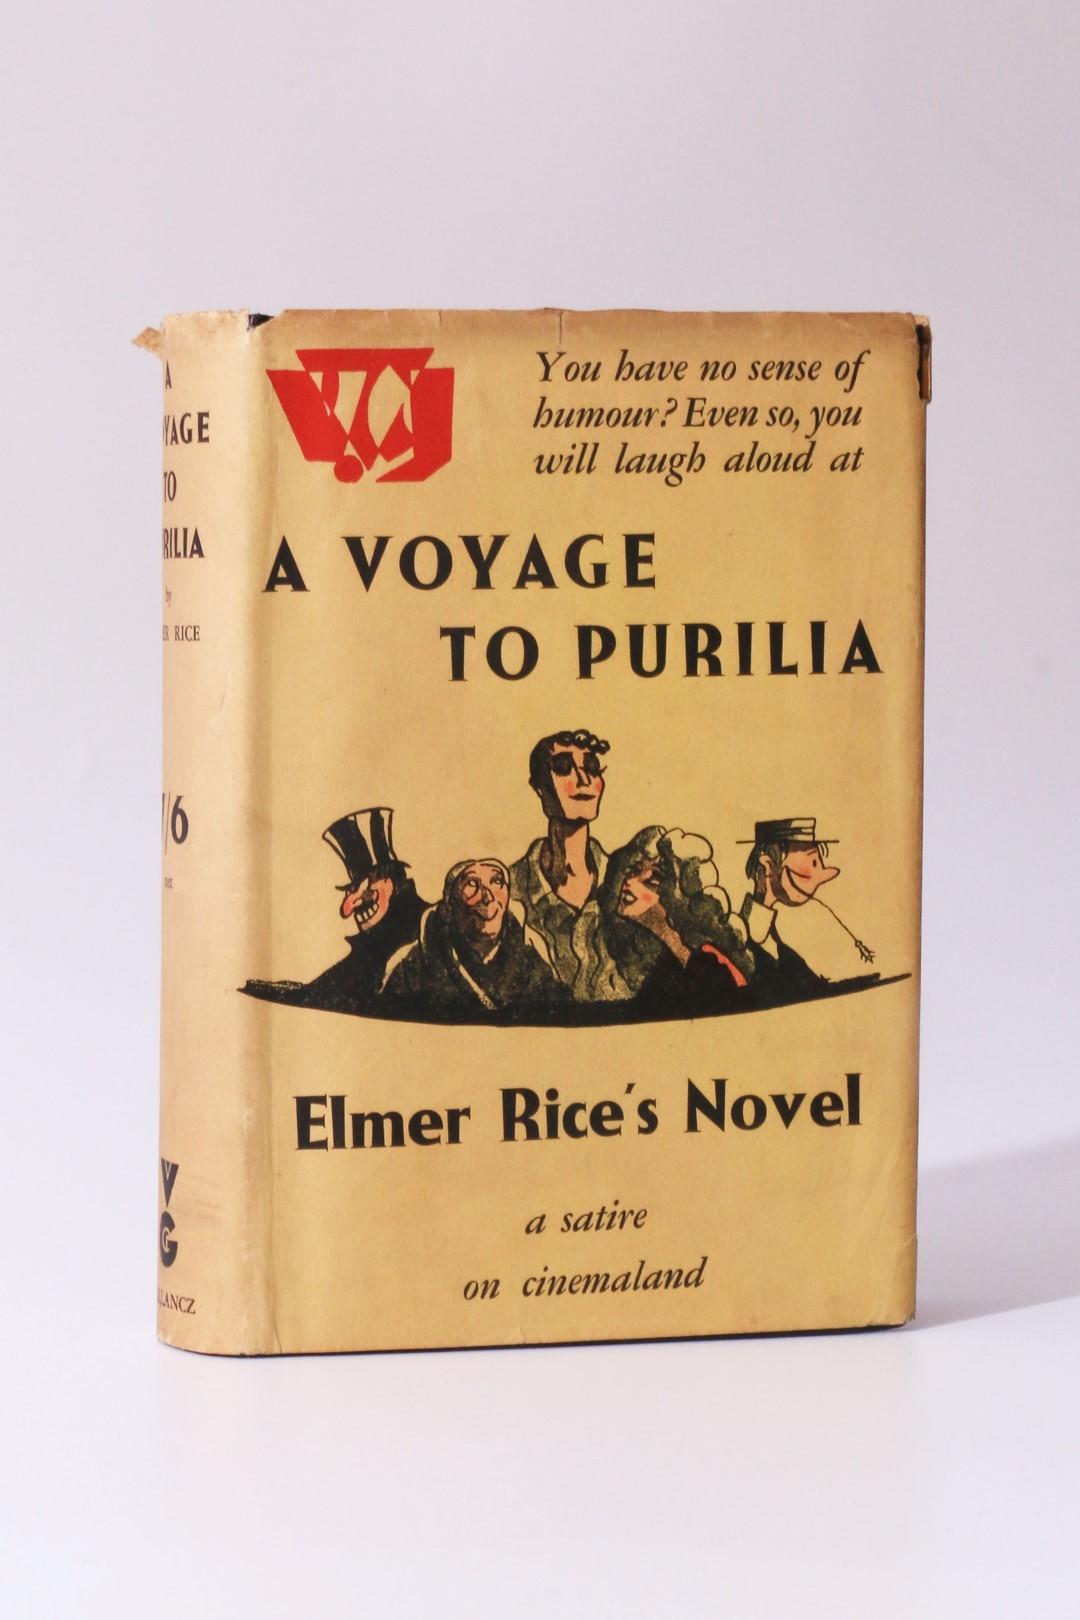 Elmer Rice - A Voyage to Purilia - Gollancz, 1930, First Edition.